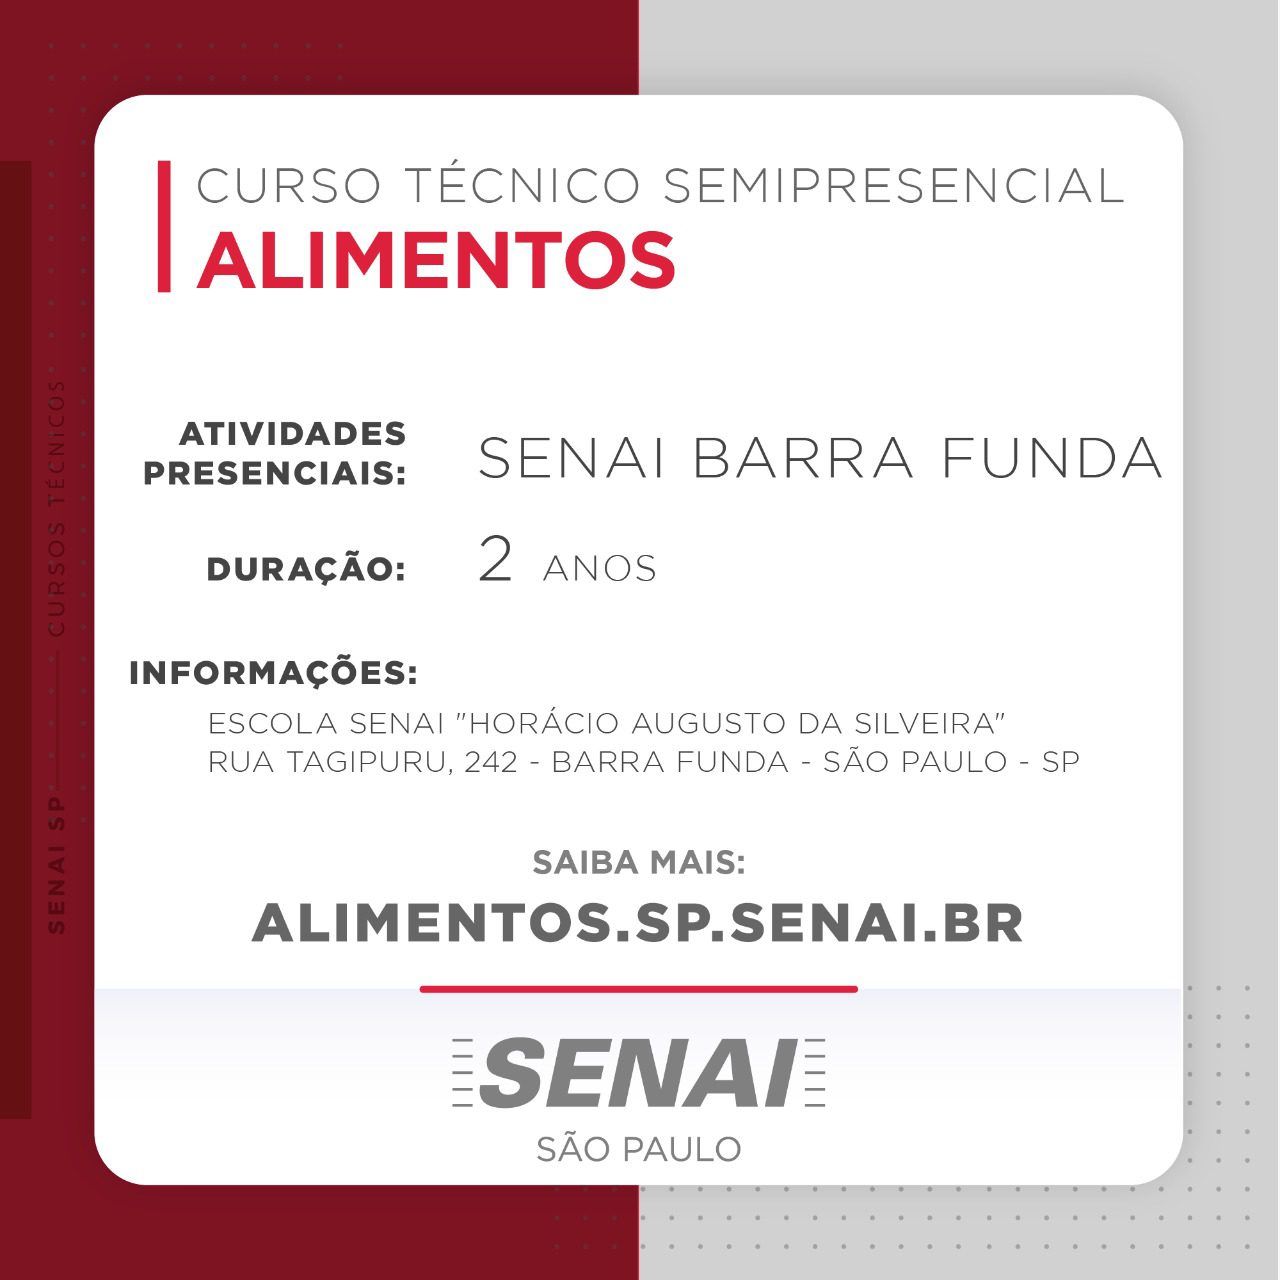 SENAI promove CURSO TÉCNICO EM ALIMENTOS – EAD & Semipresencial